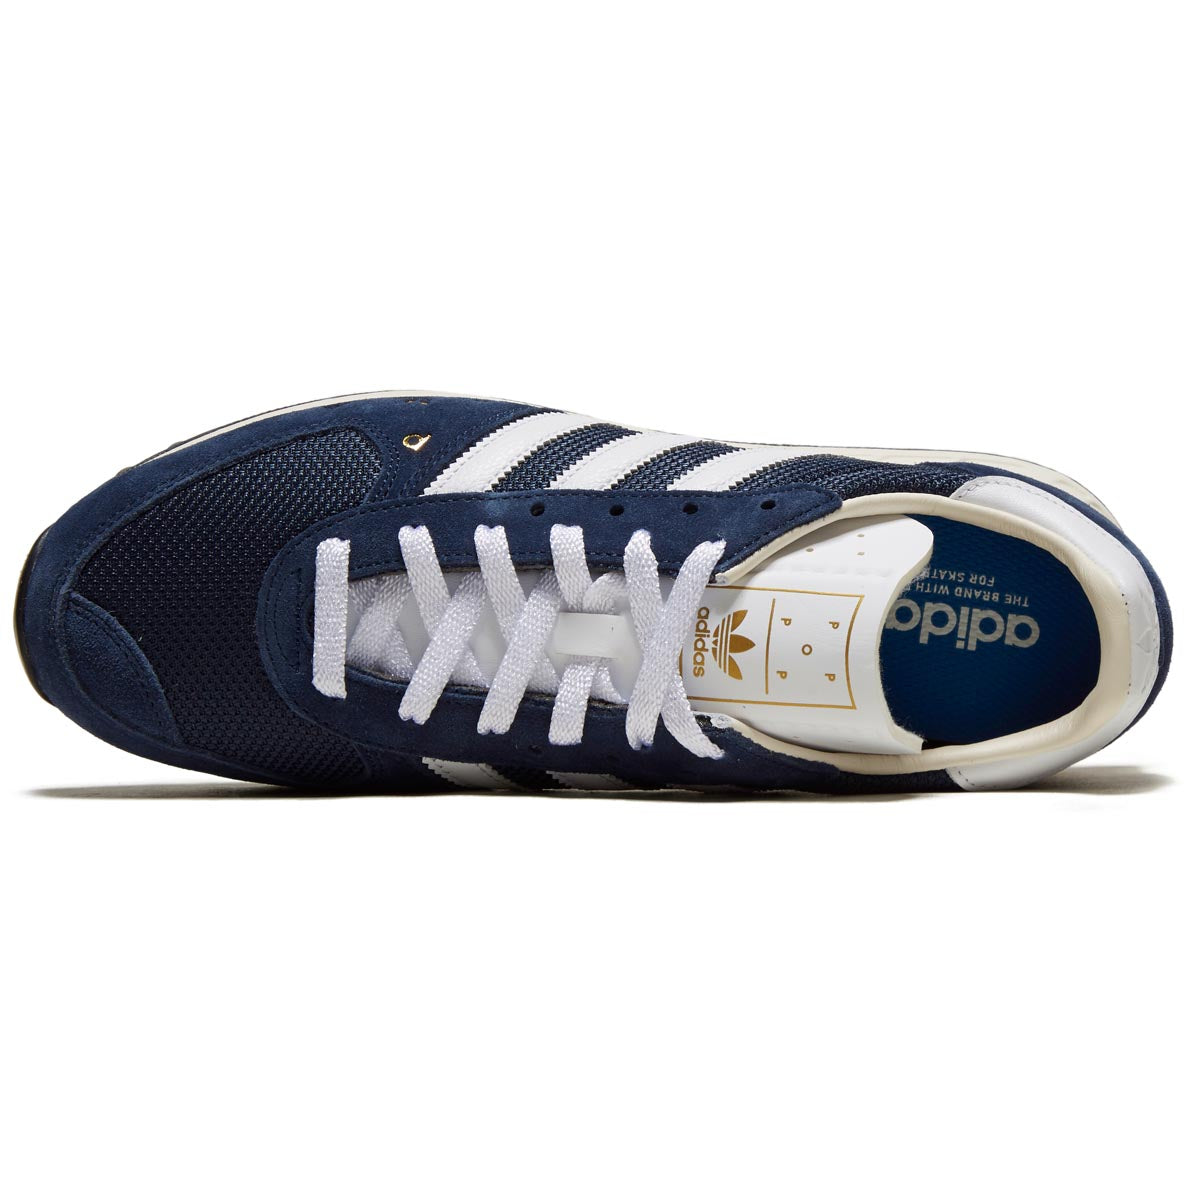 Adidas x Pop Trading Co Trx Shoes - Collegiate Navy/White/Chalk White image 3